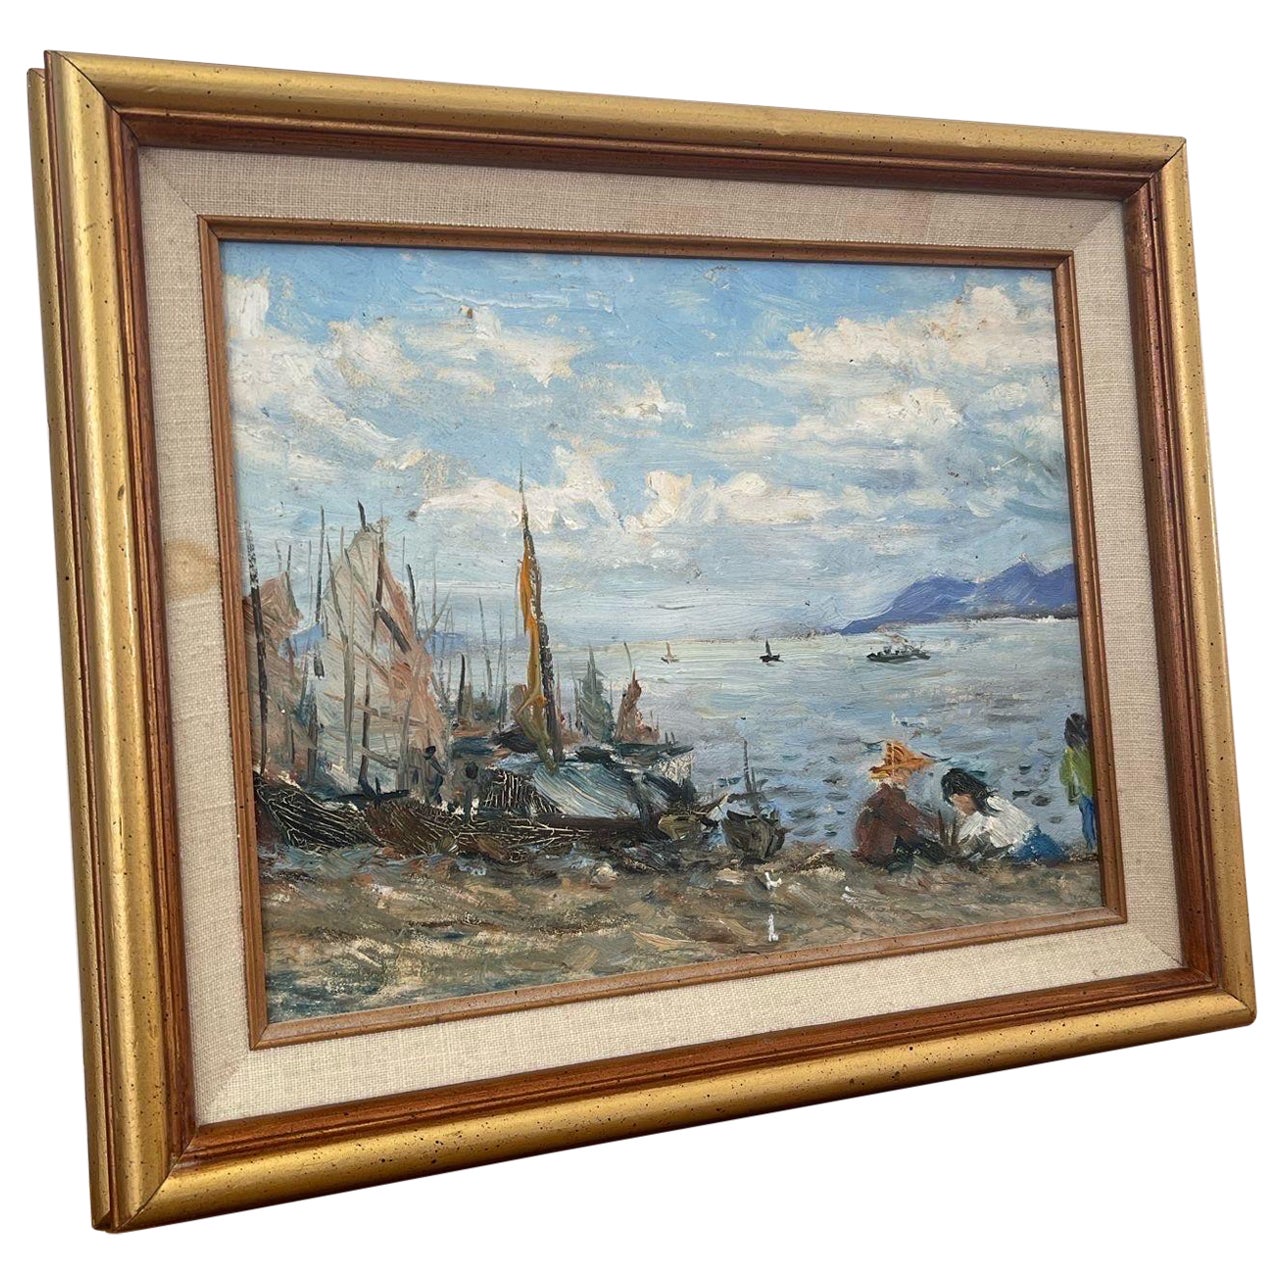 Gerahmtes Gemälde einer Strandszene im Vintage-Stil.